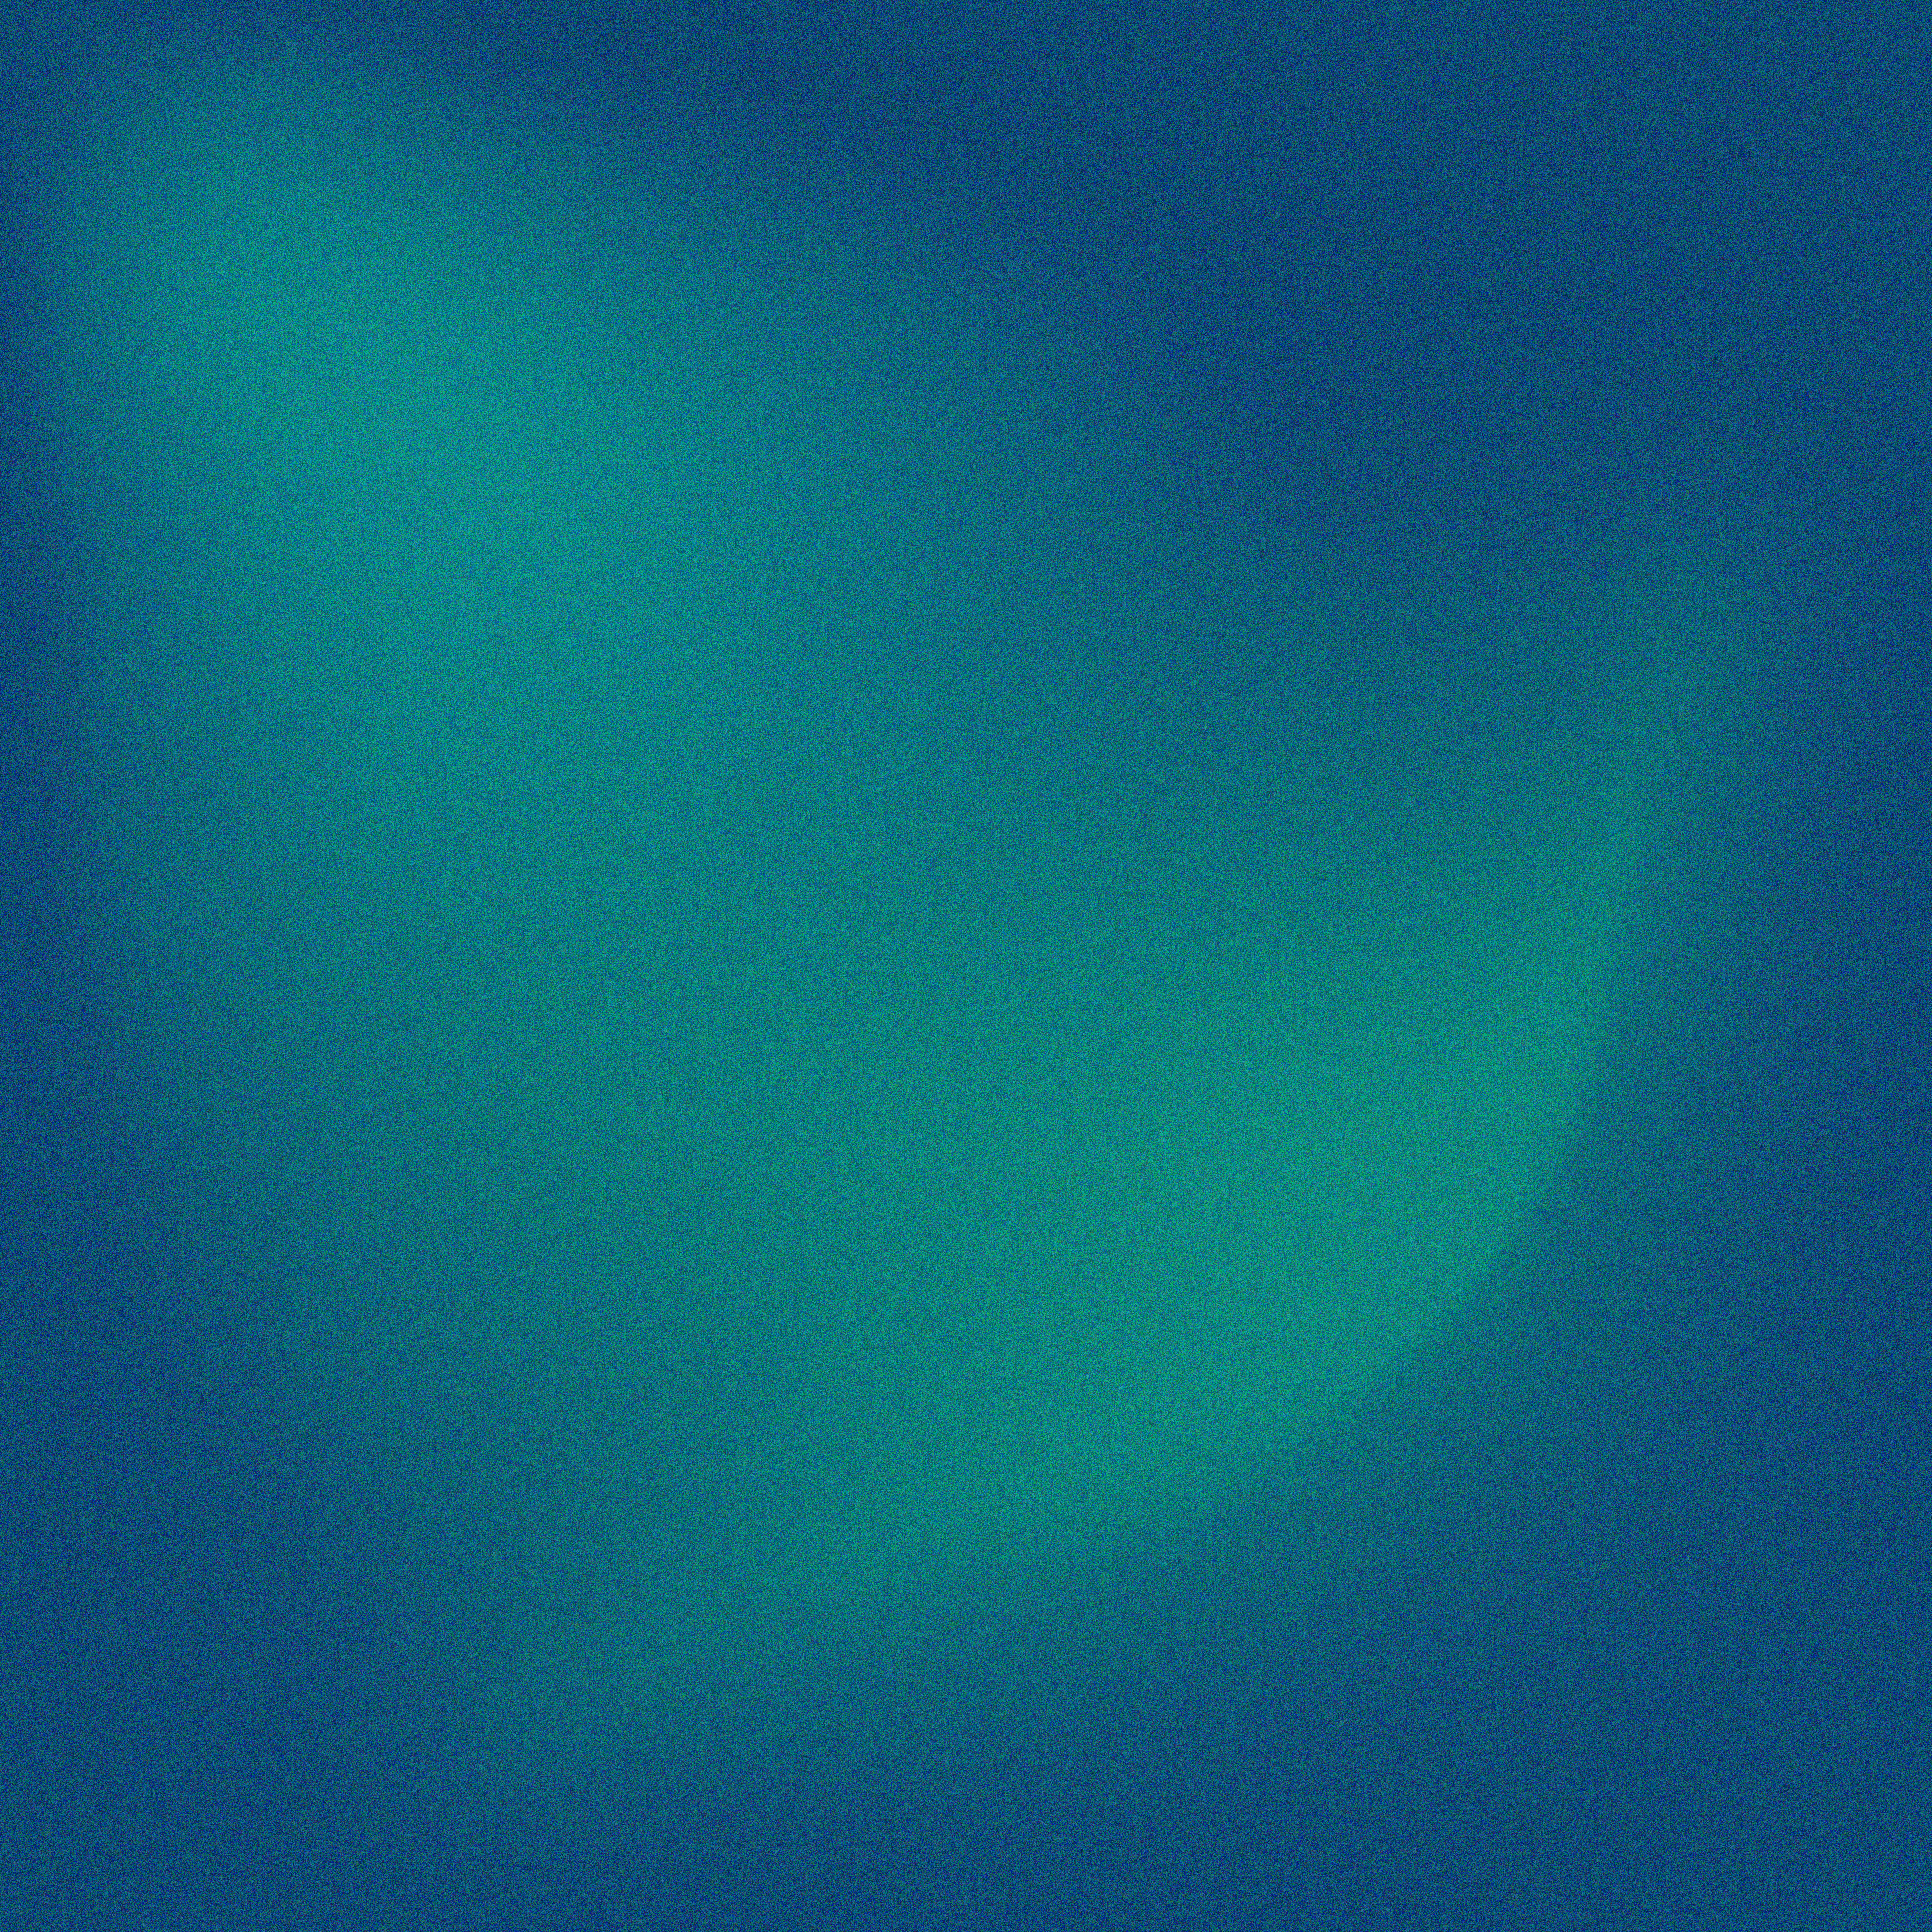 Background grain Aqua ,blue and green gradient